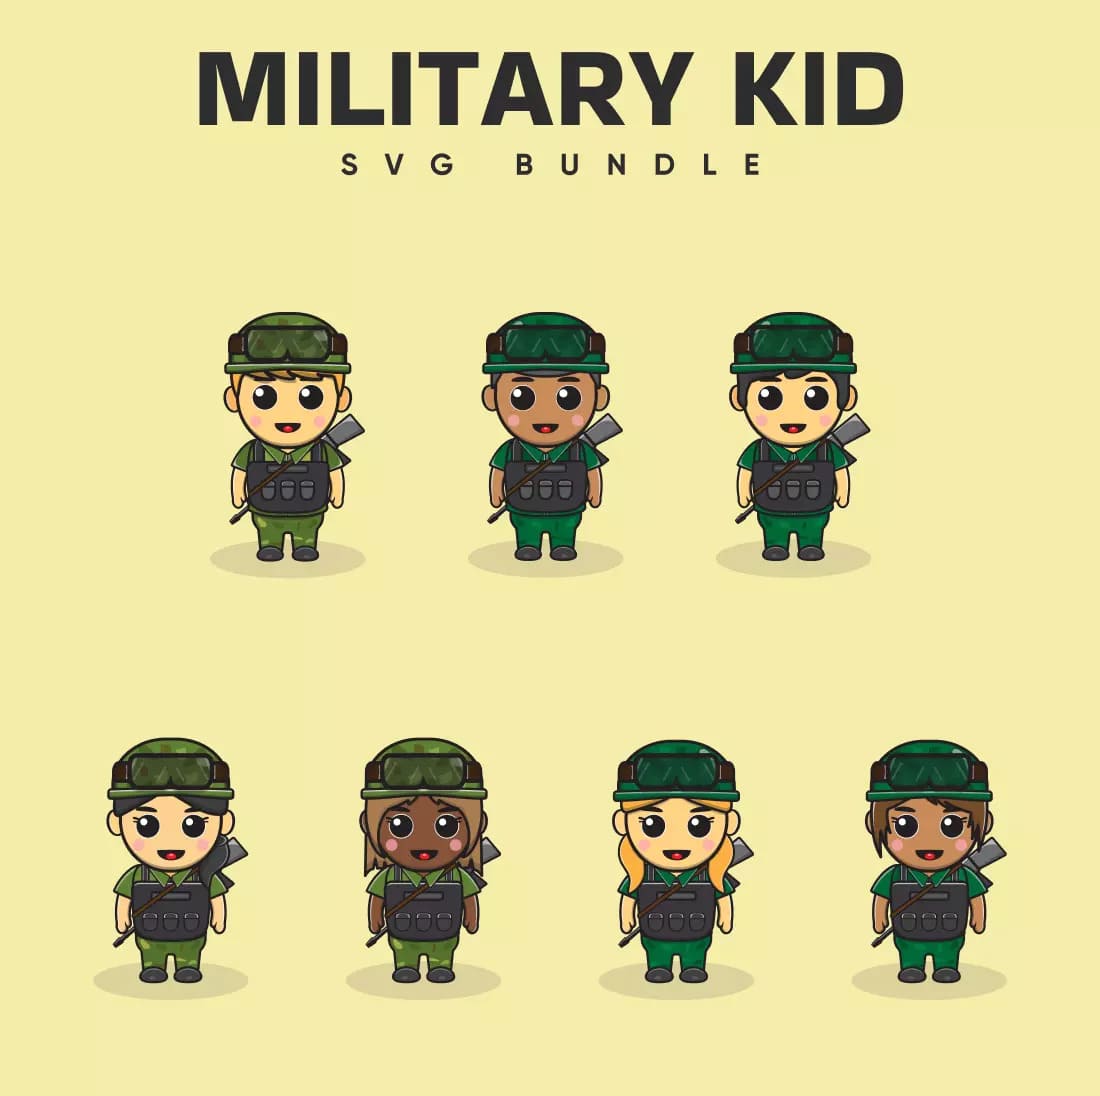 Military Kid SVG Bundle Preview.